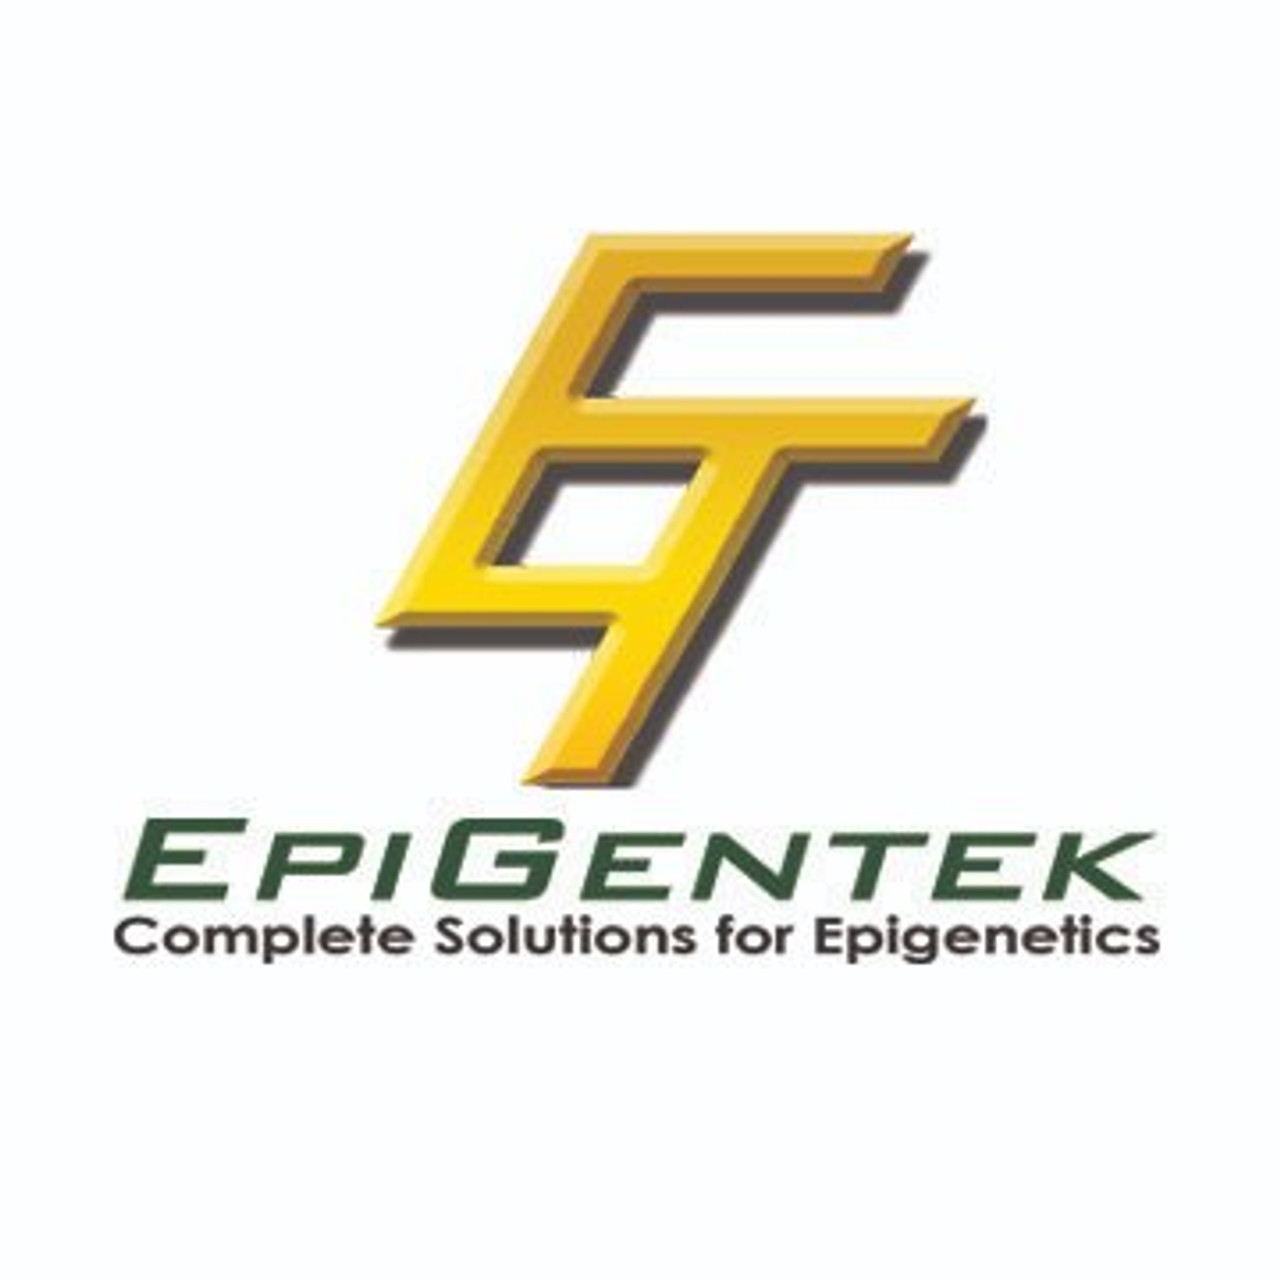 QuantiSir Specific Gene Knockdown Quantification Kit For Epigenetic Regulators - G9a